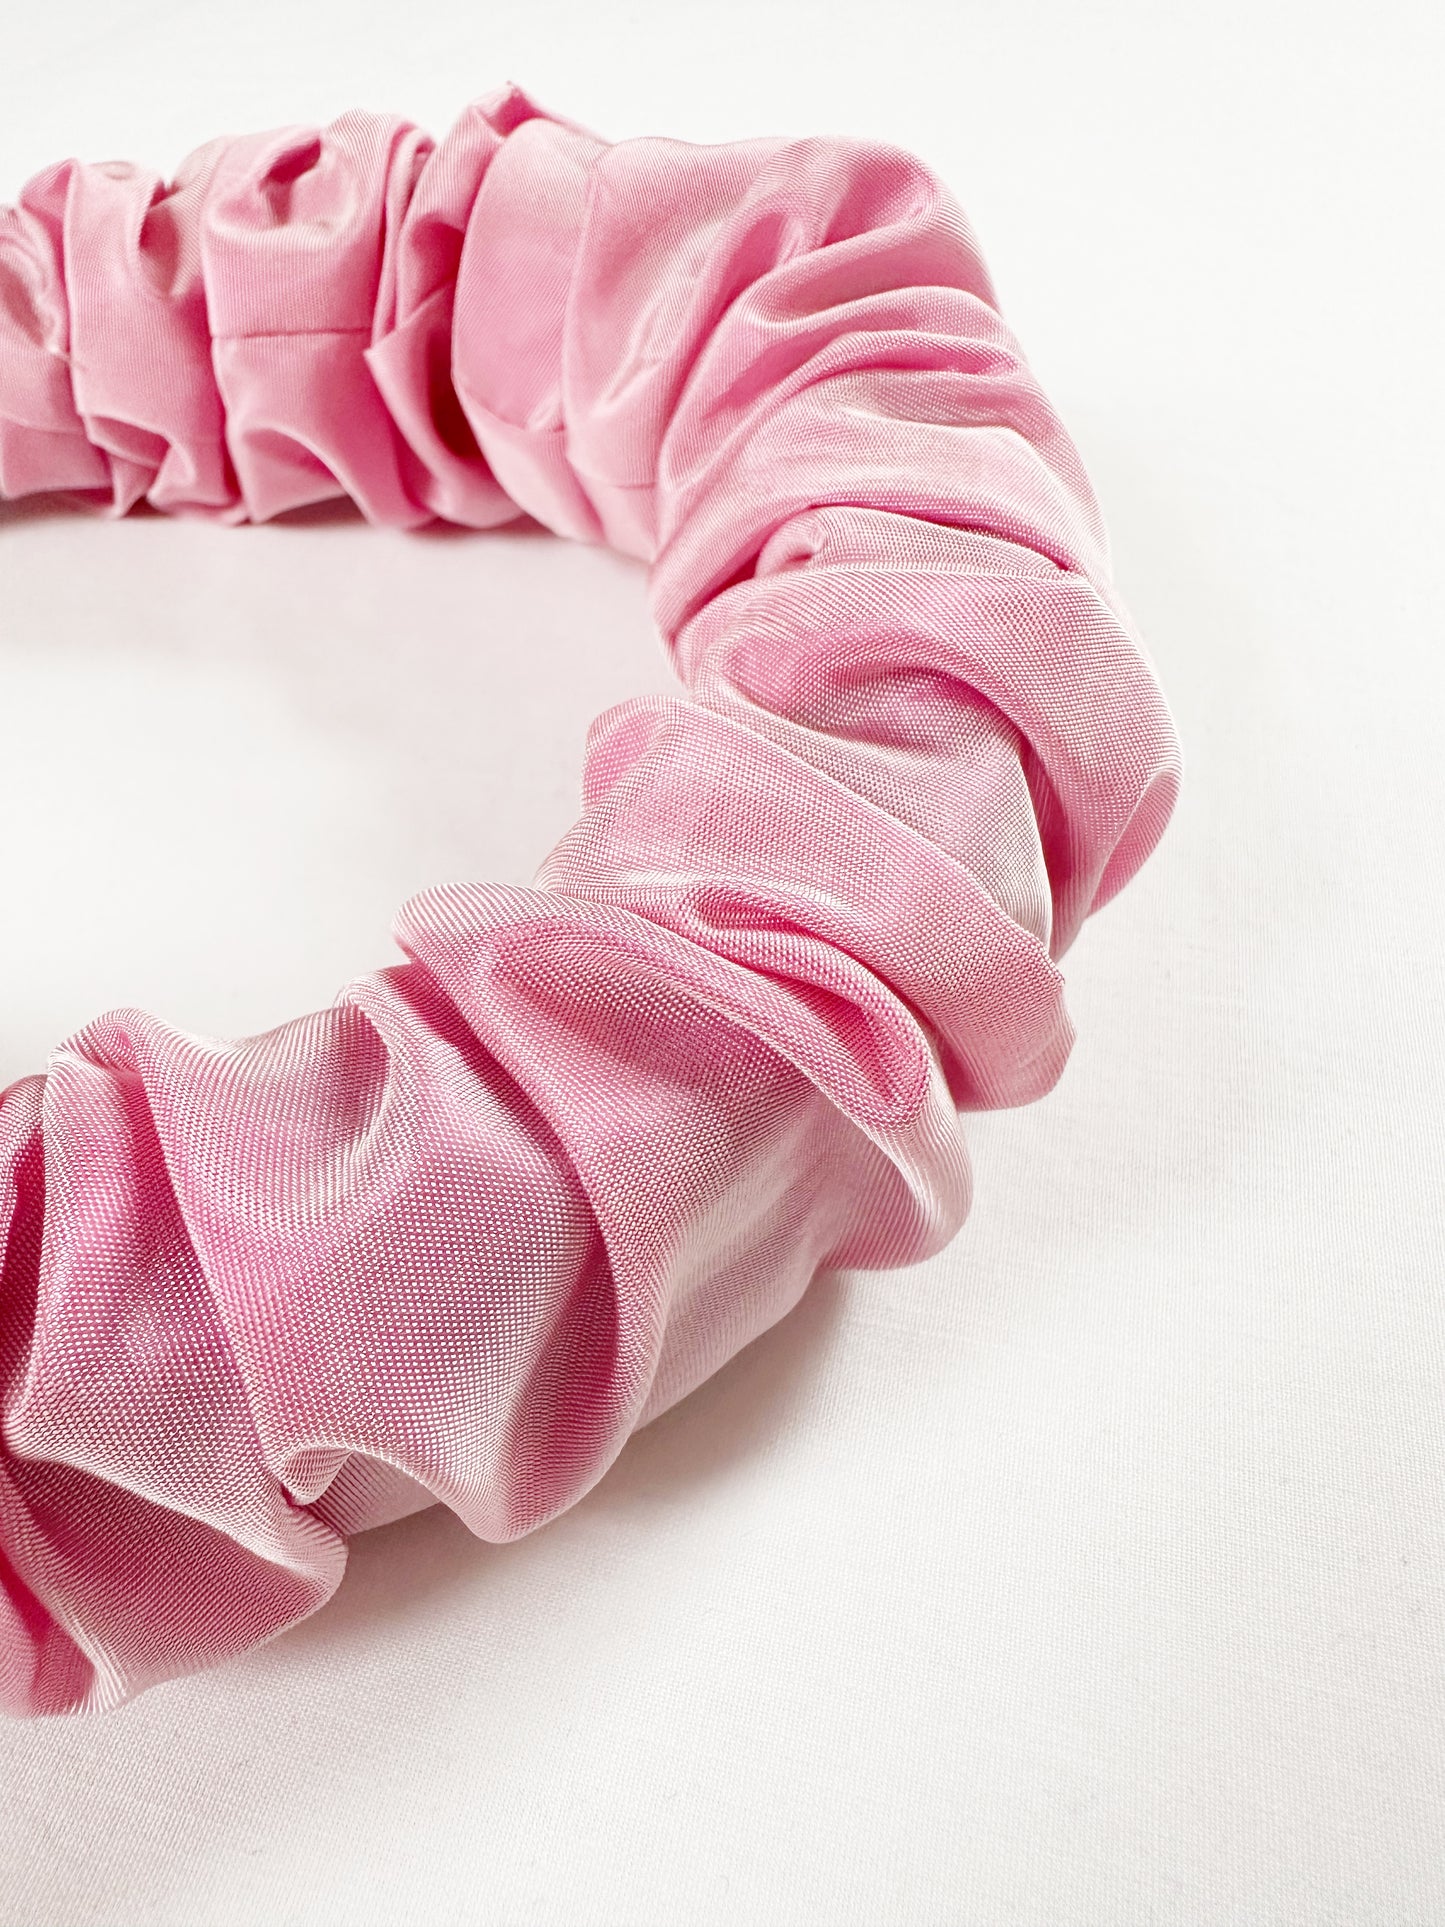 Ruffle Headband in pink taffeta